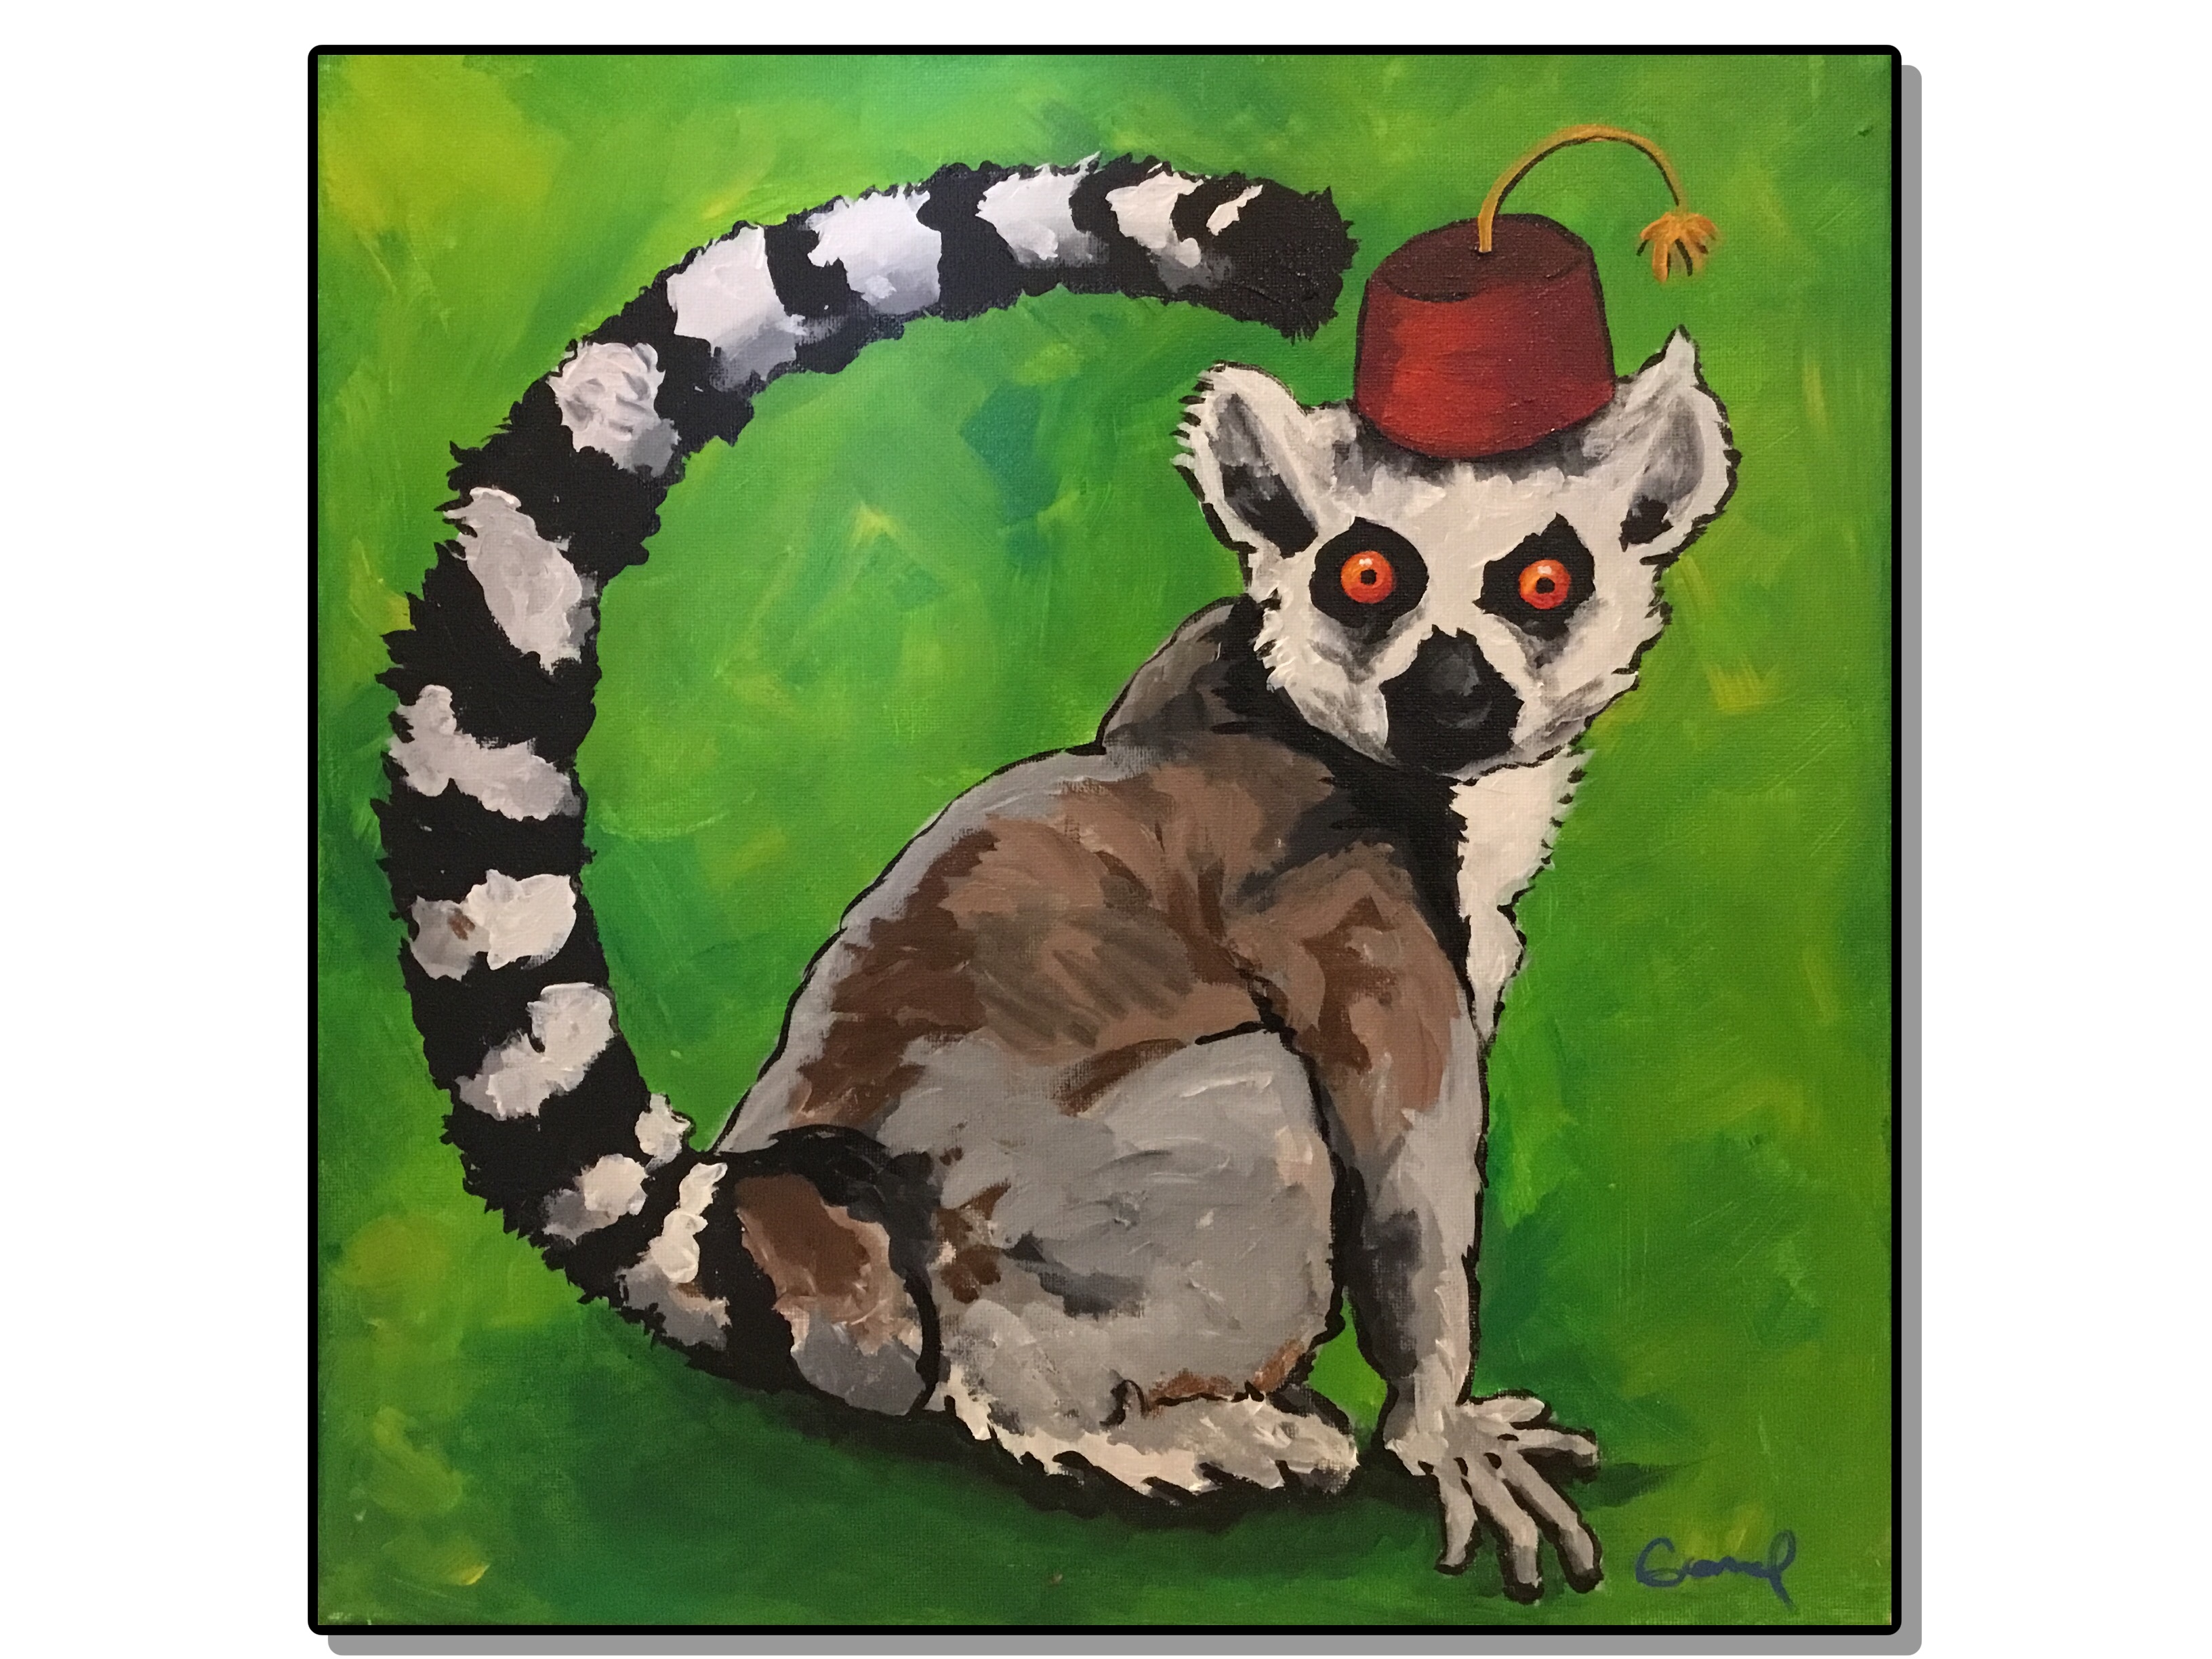 Conspiracy_of_Lemurs